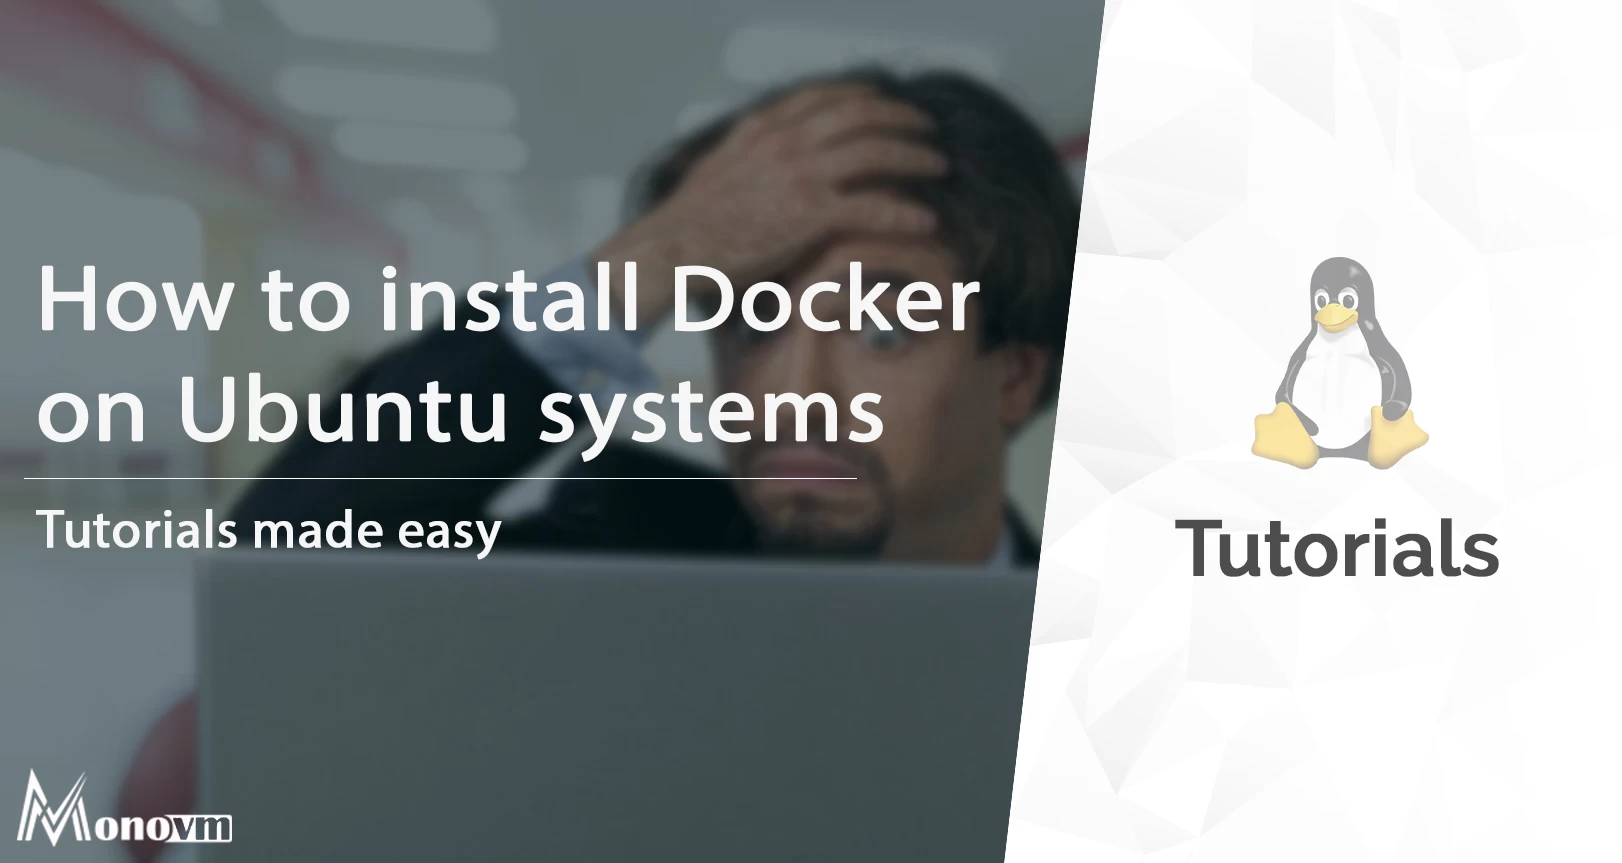 How to install Docker on Ubuntu?